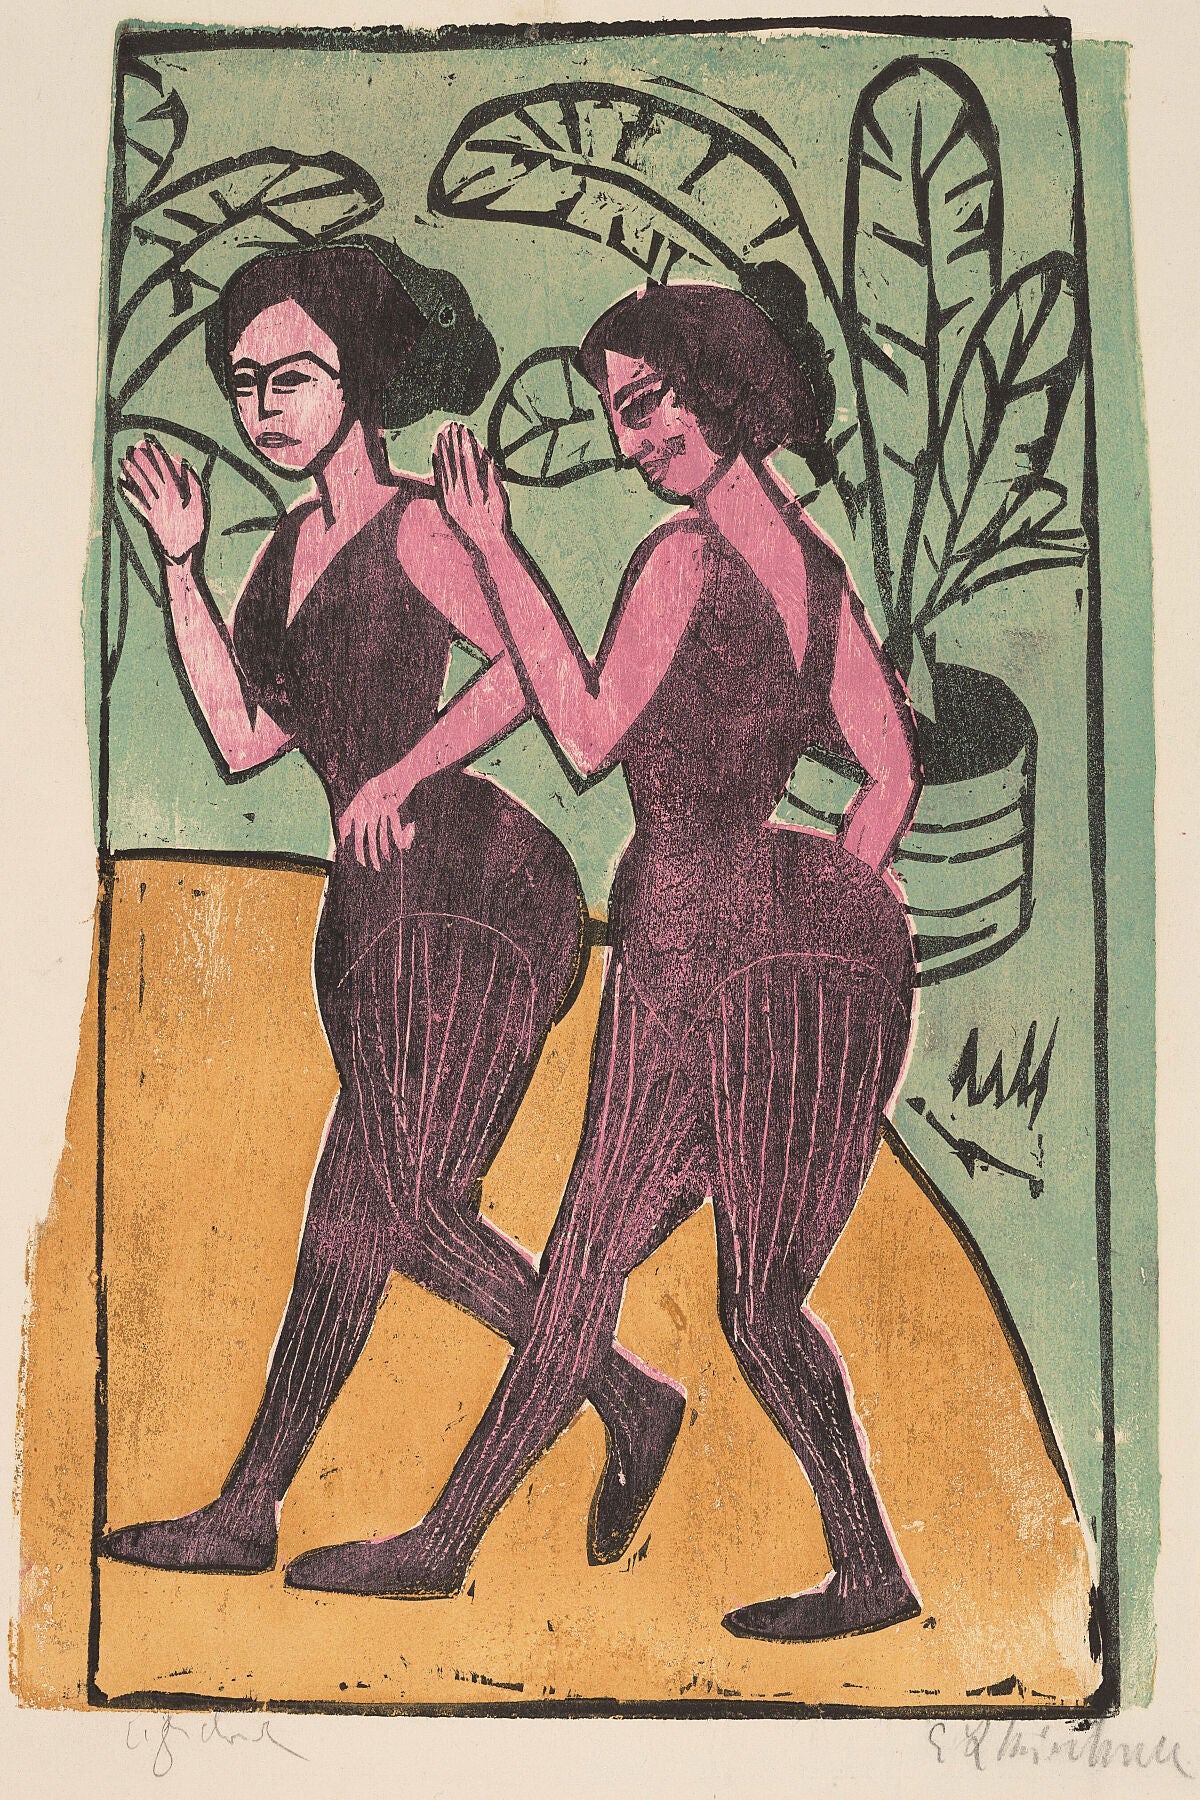 English Step Dancers by Ernst Ludwig Kirchner - 1911